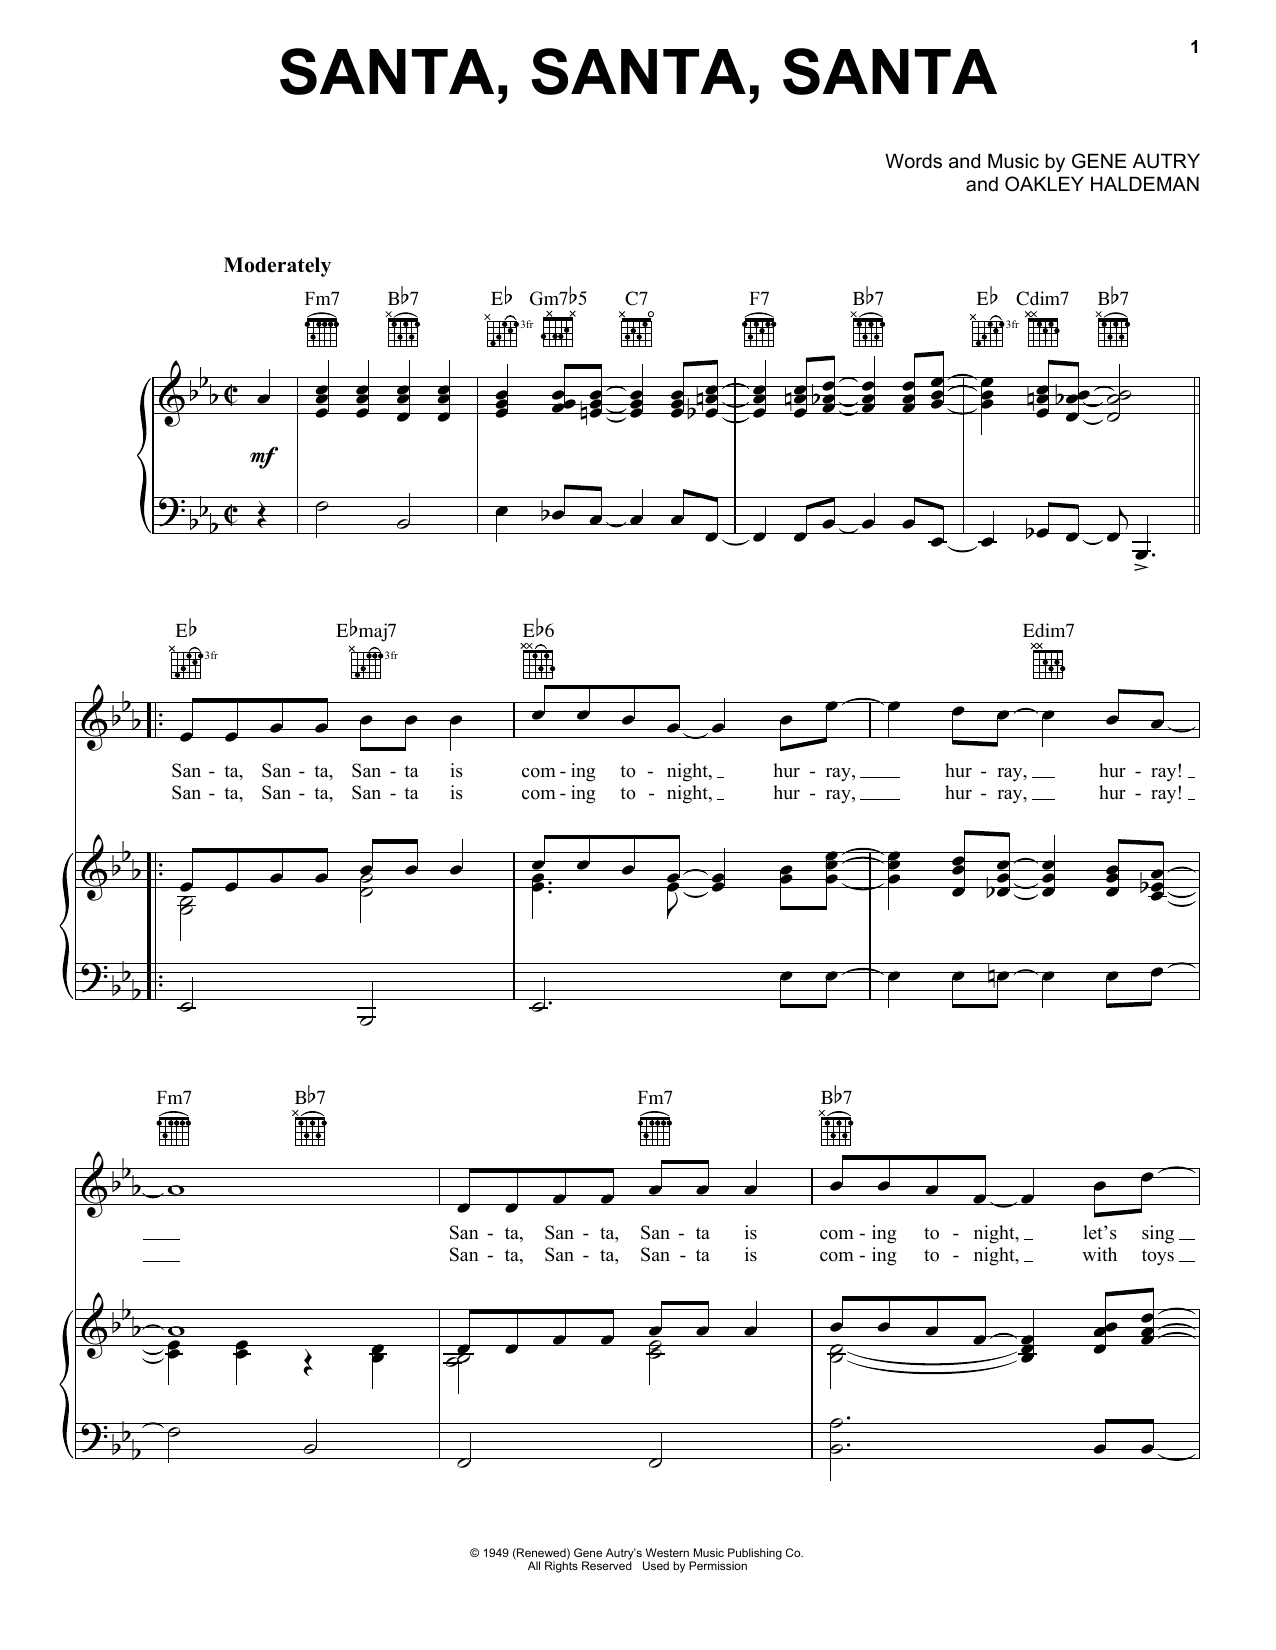 Gene Autry Santa, Santa, Santa sheet music notes and chords arranged for Piano, Vocal & Guitar Chords (Right-Hand Melody)